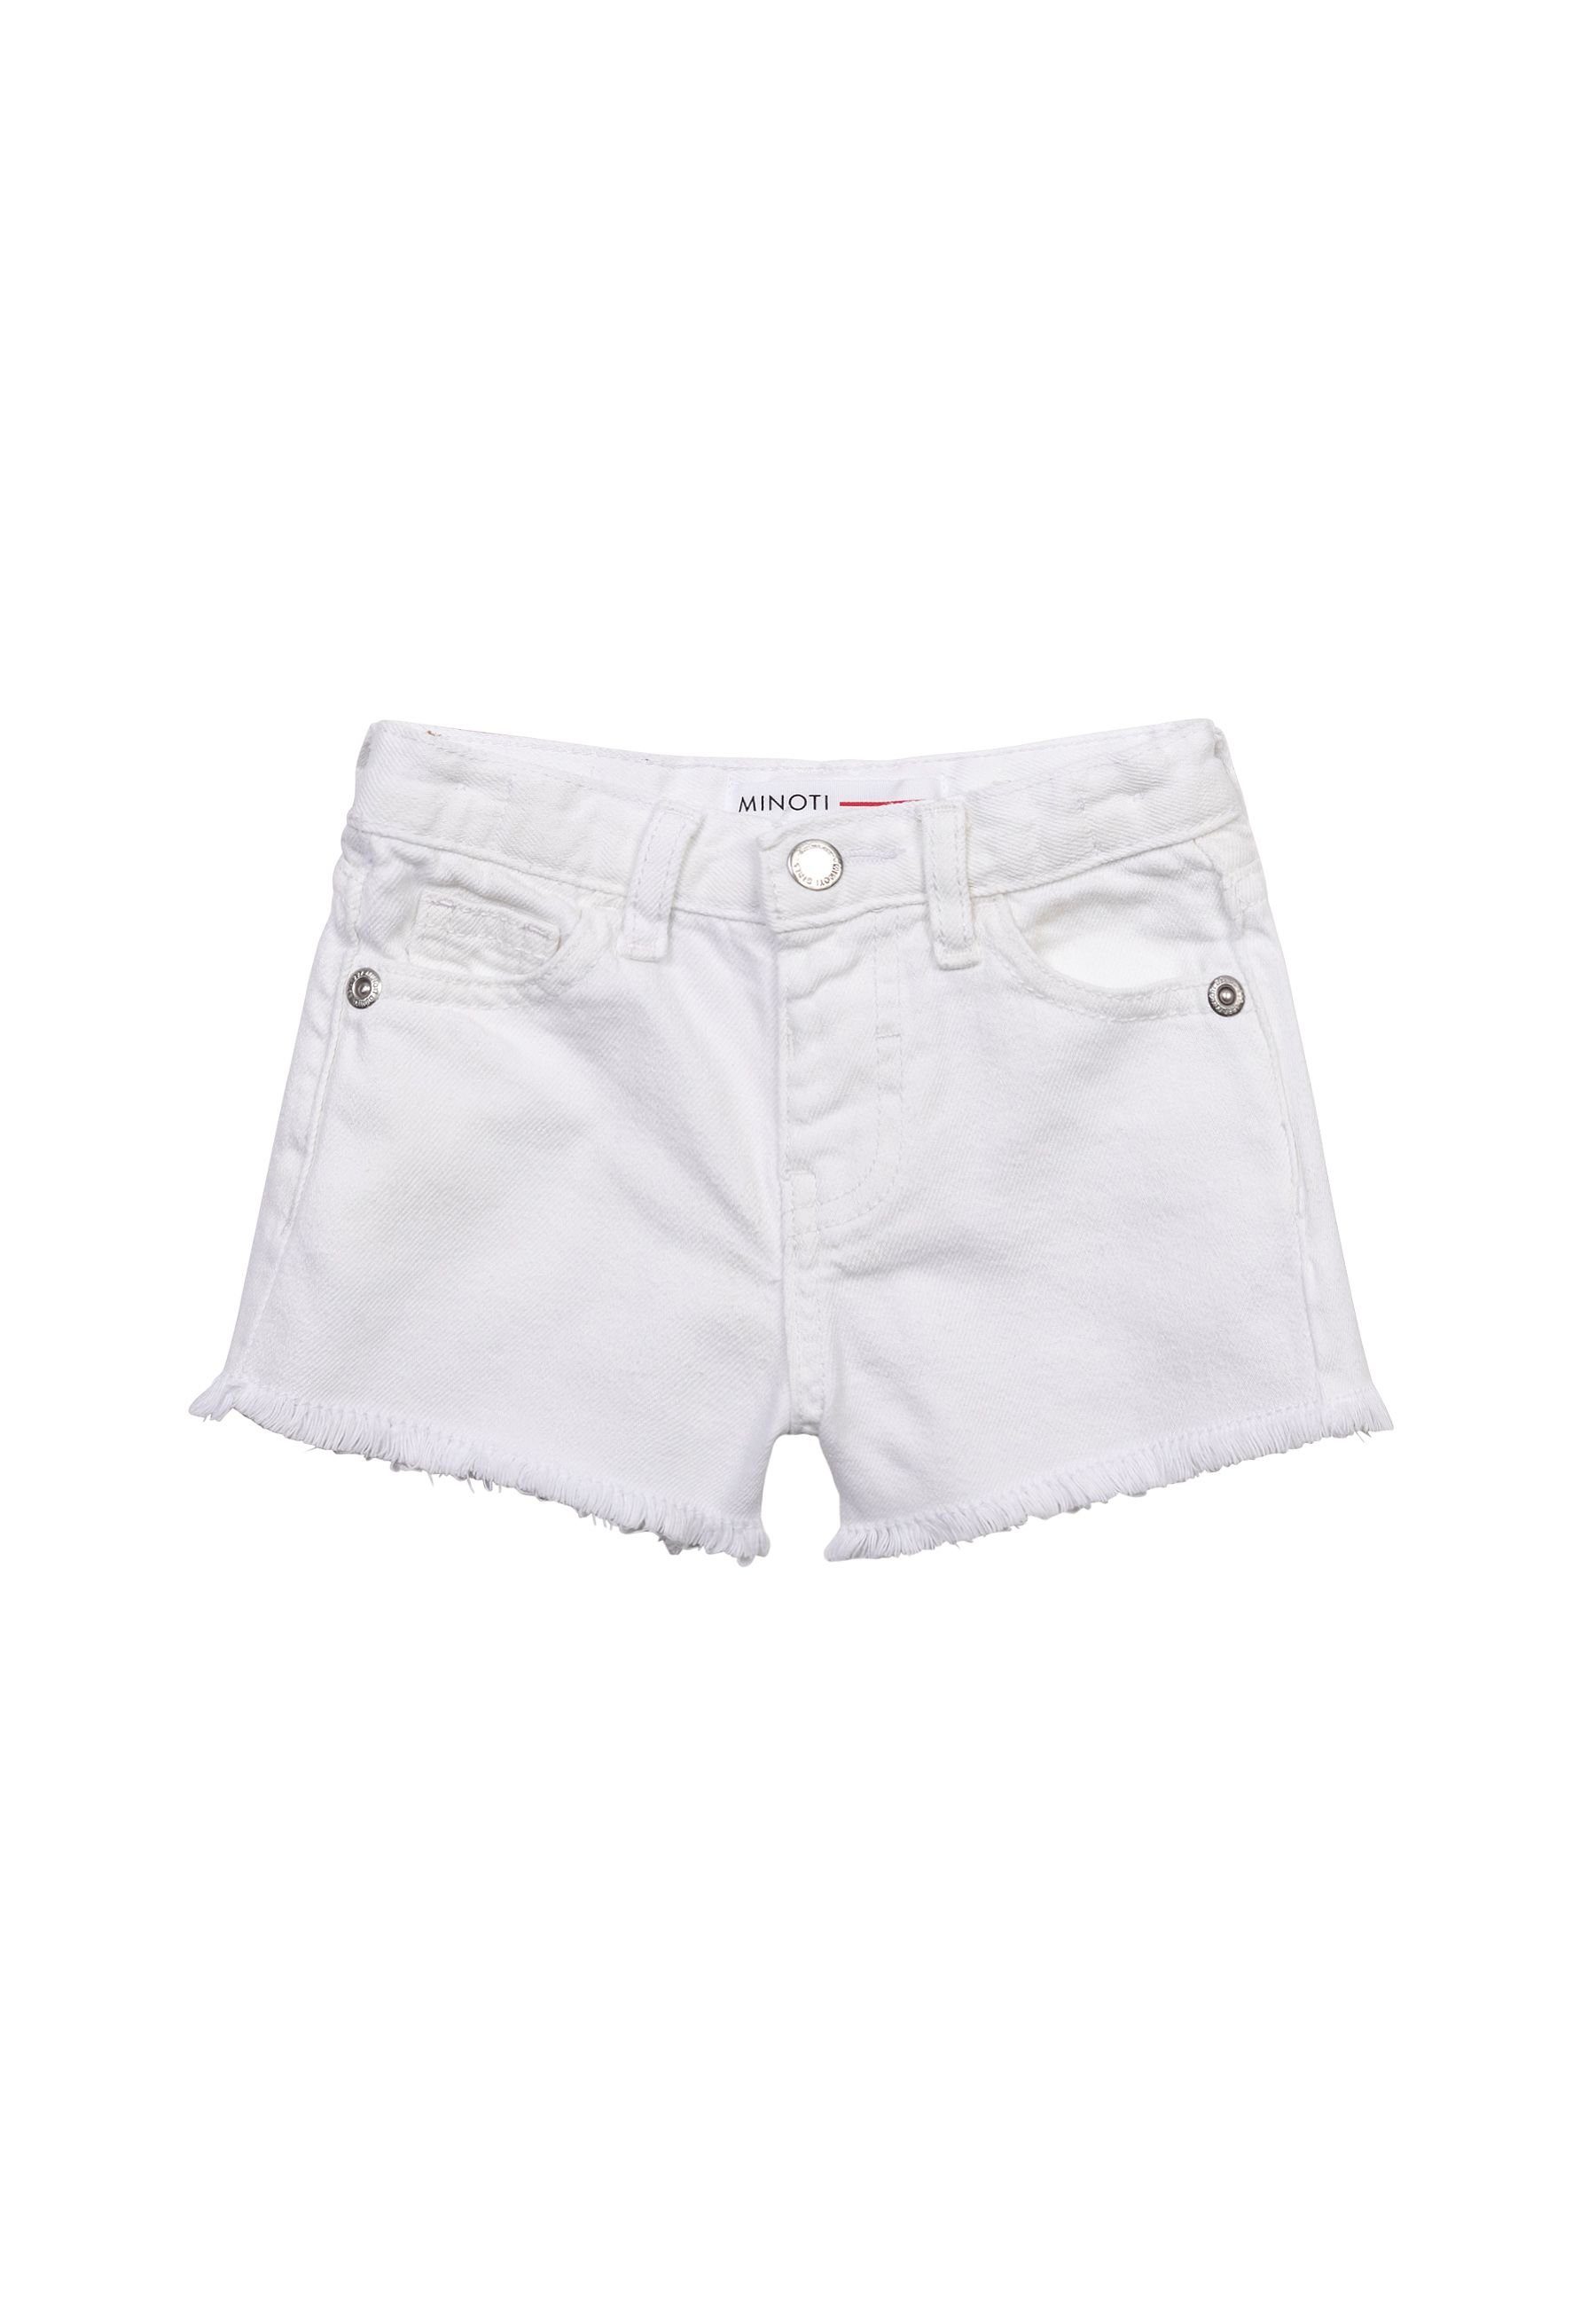 MINOTI Jeansshorts Kurze Jeans Shorts (1y-14y) Denim-Weiß | Jeansshorts